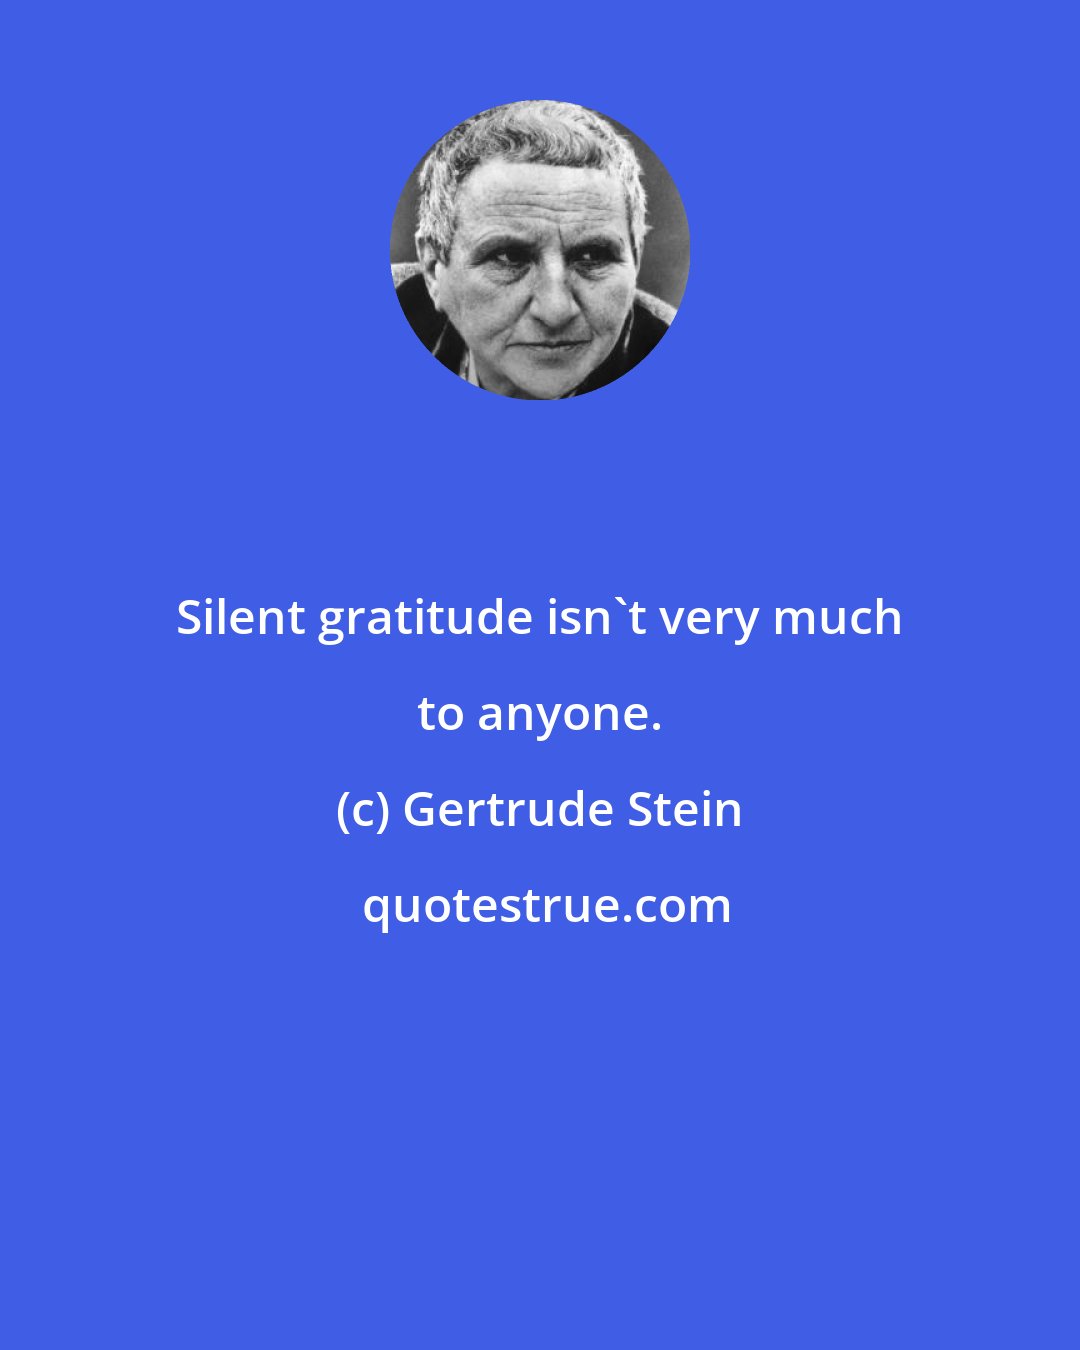 Gertrude Stein: Silent gratitude isn't very much to anyone.